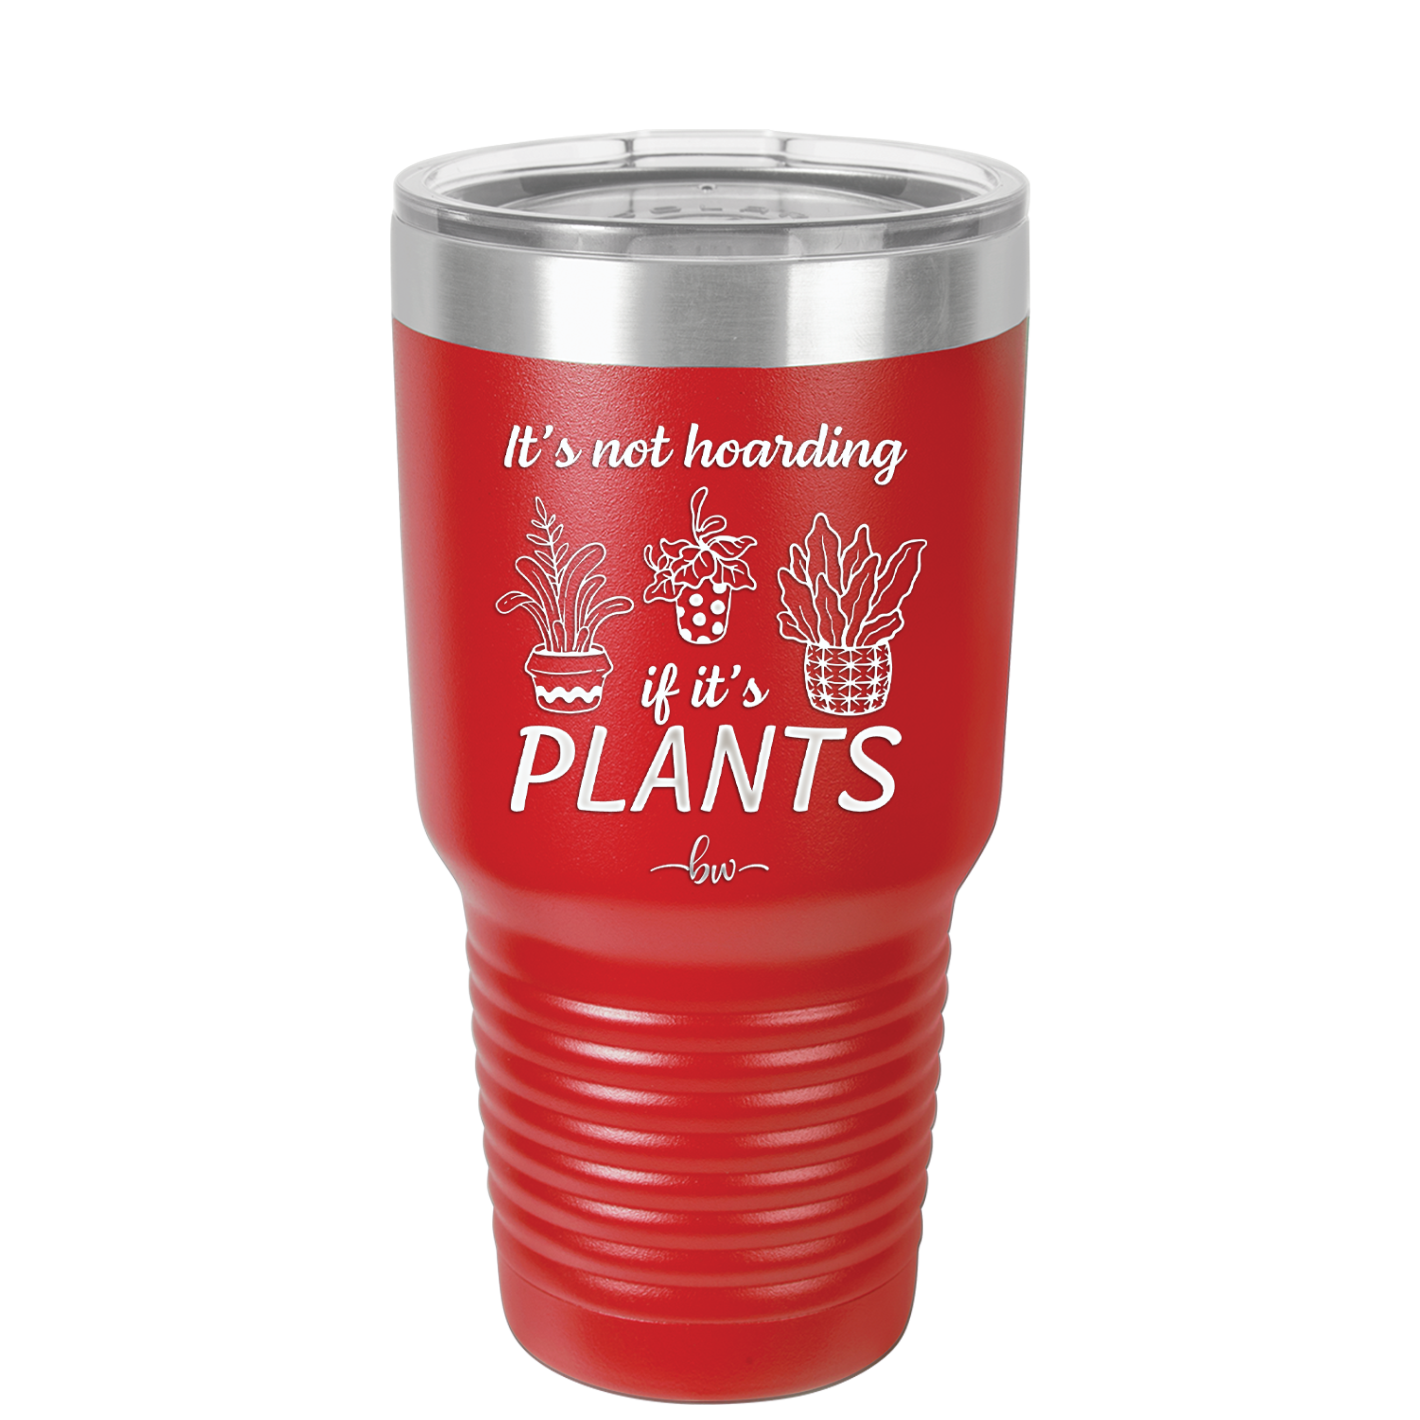 It's Not Hoarding if it's Plants - Laser Engraved Stainless Steel Drinkware - 2062 -